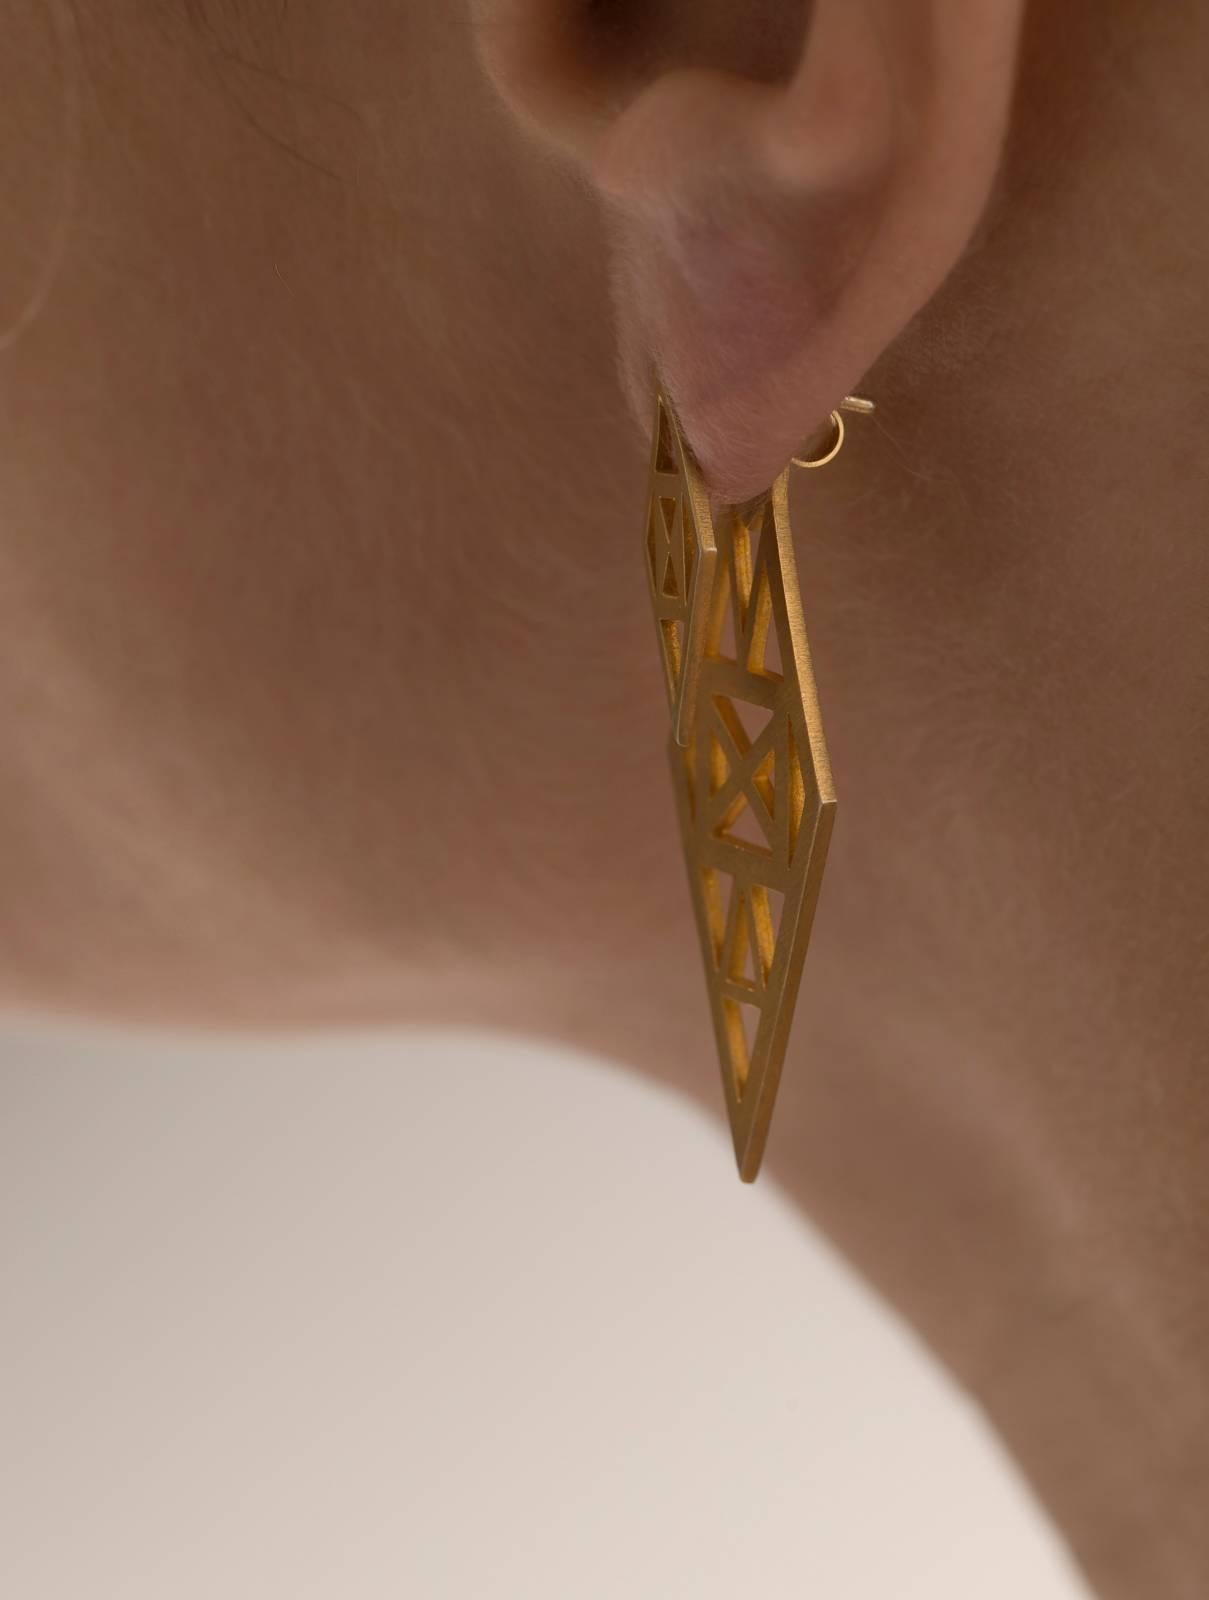 rhombus shaped earrings